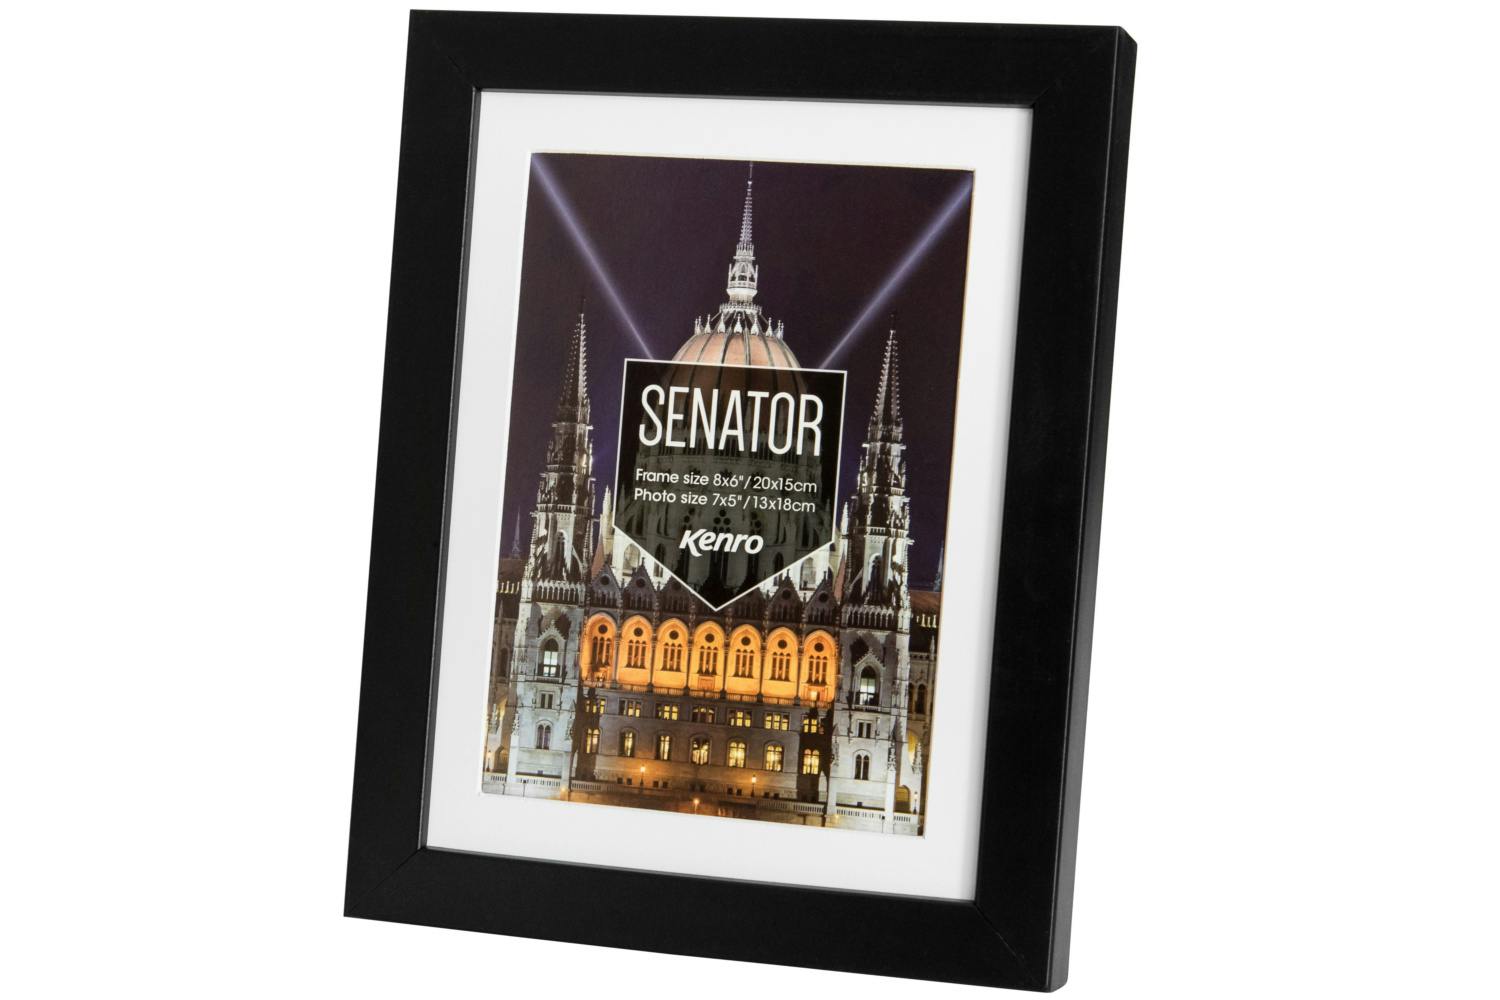 Senator 7x5/8x6" Photo Frame | Black